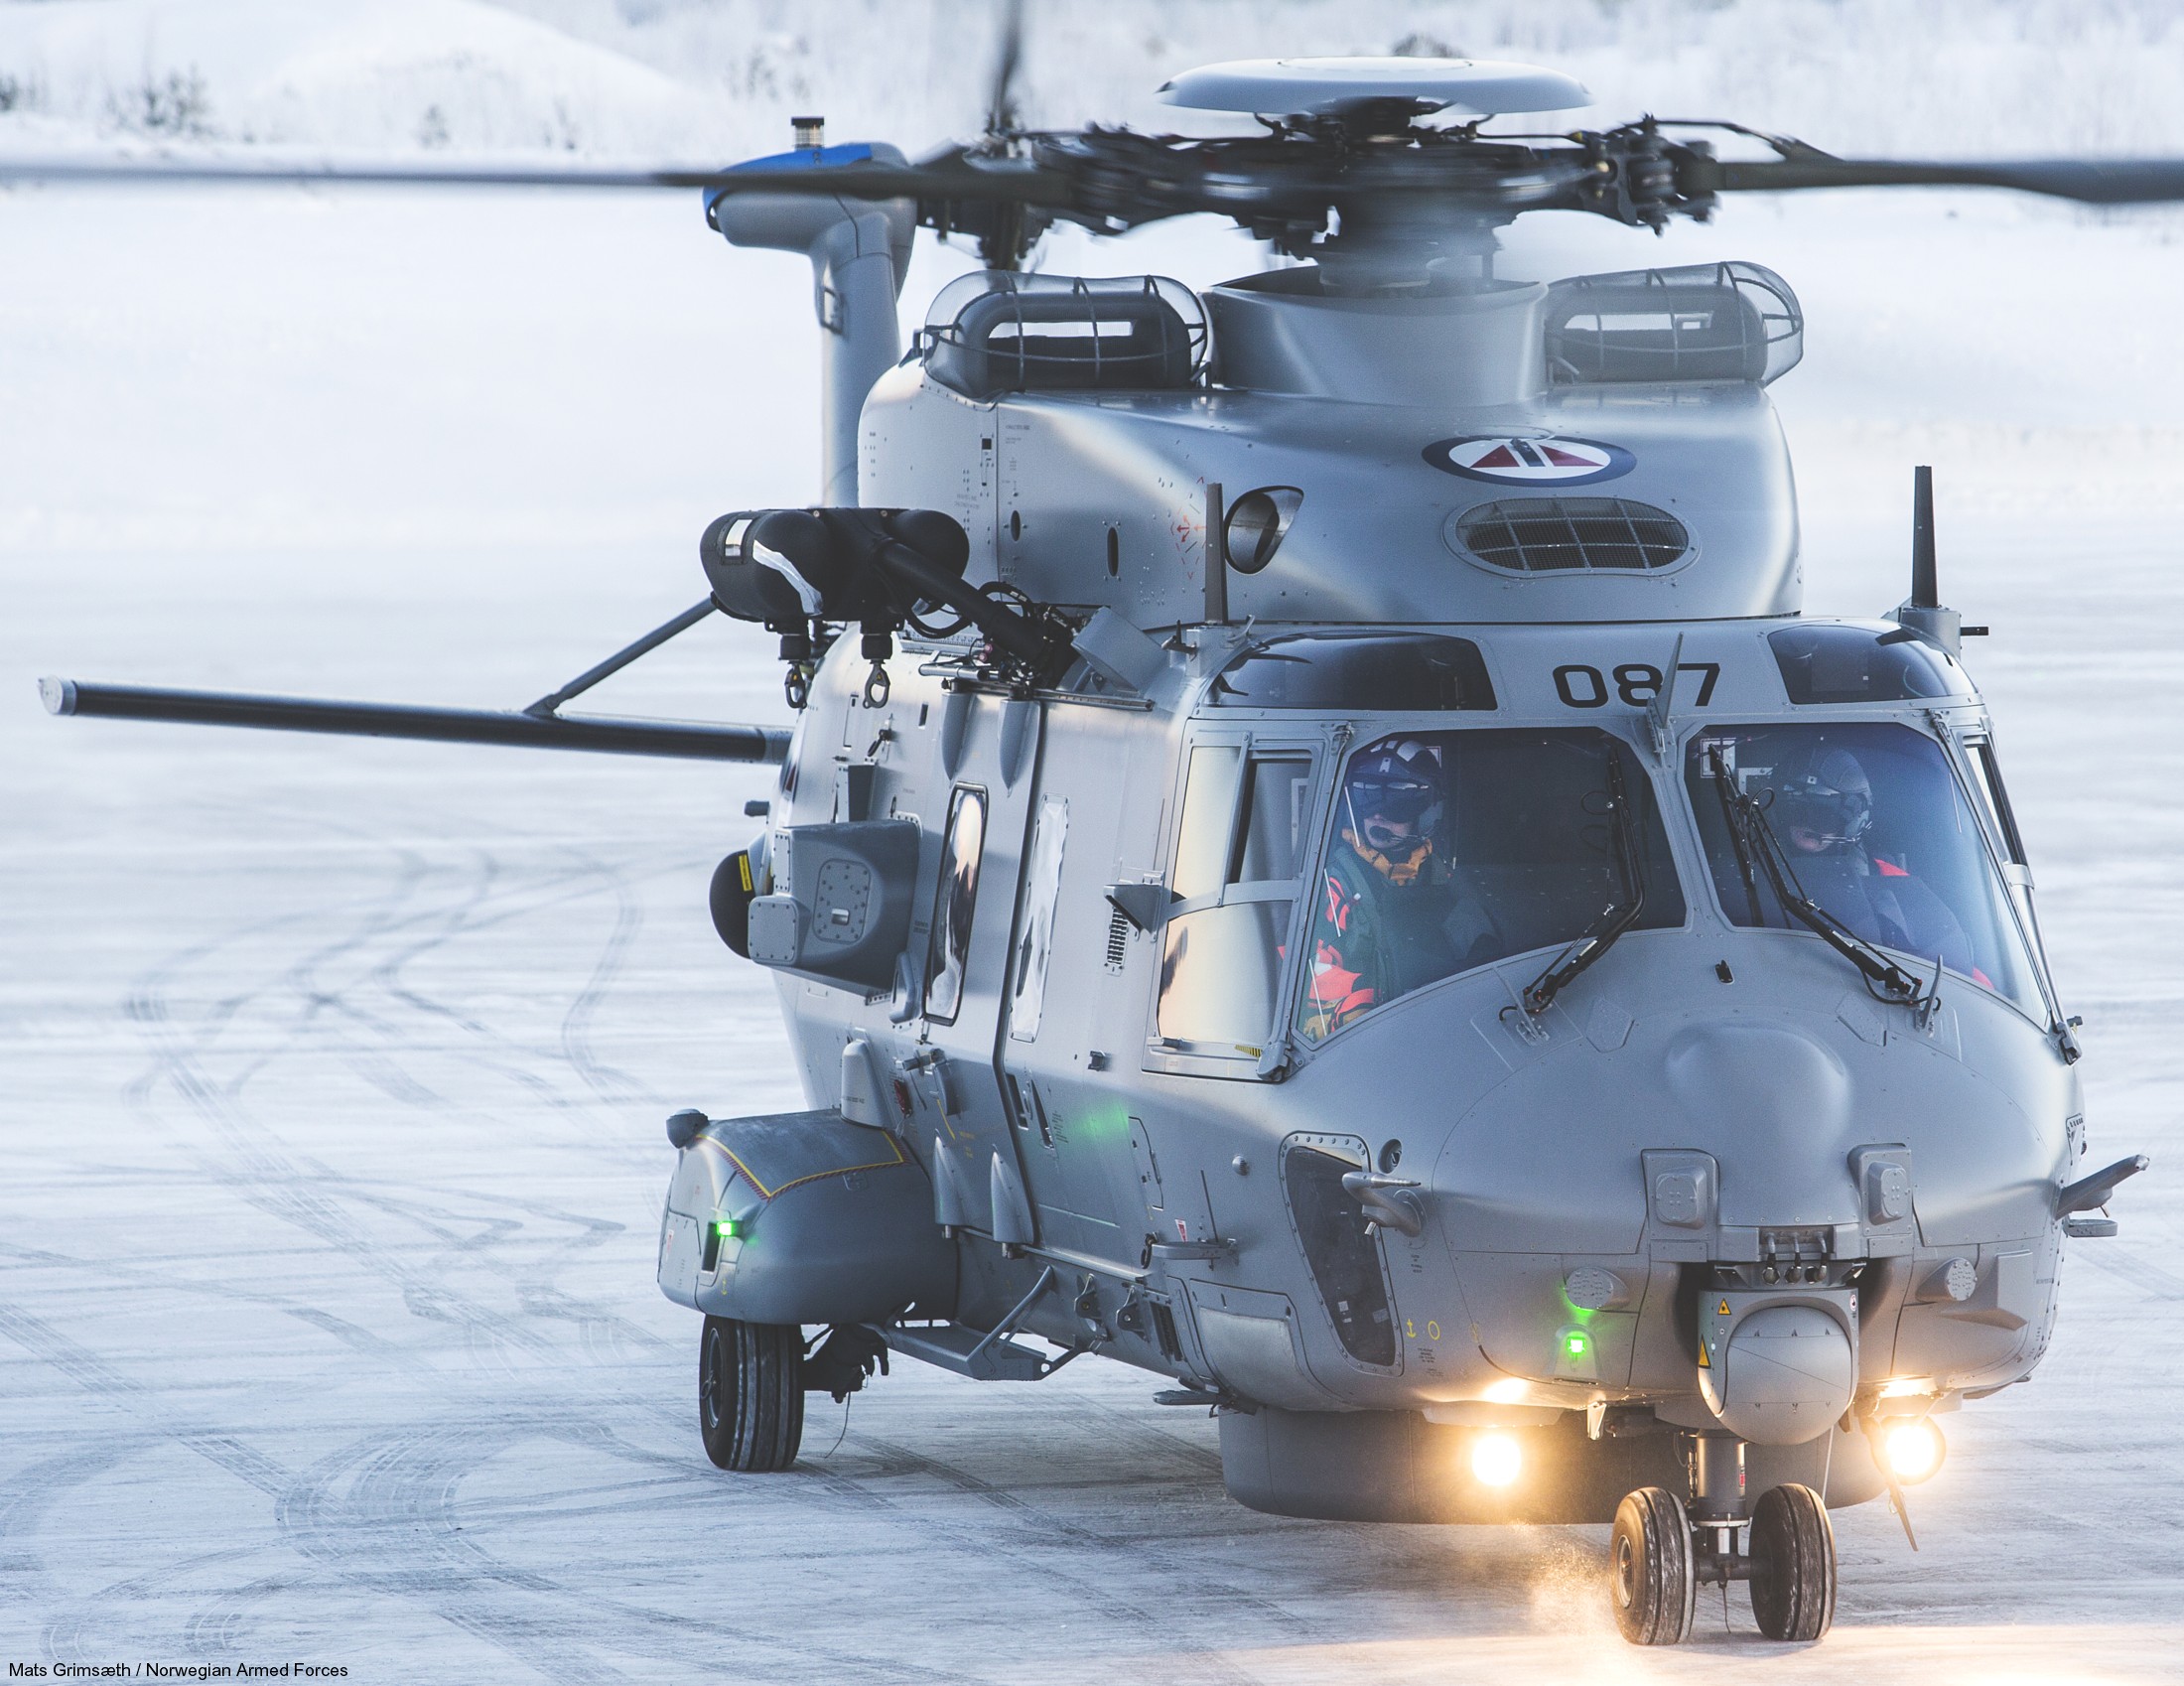 nh90 nfh asw helicopter royal norwegian coast guard navy air force kystvakt sjoforsvaret 087 02